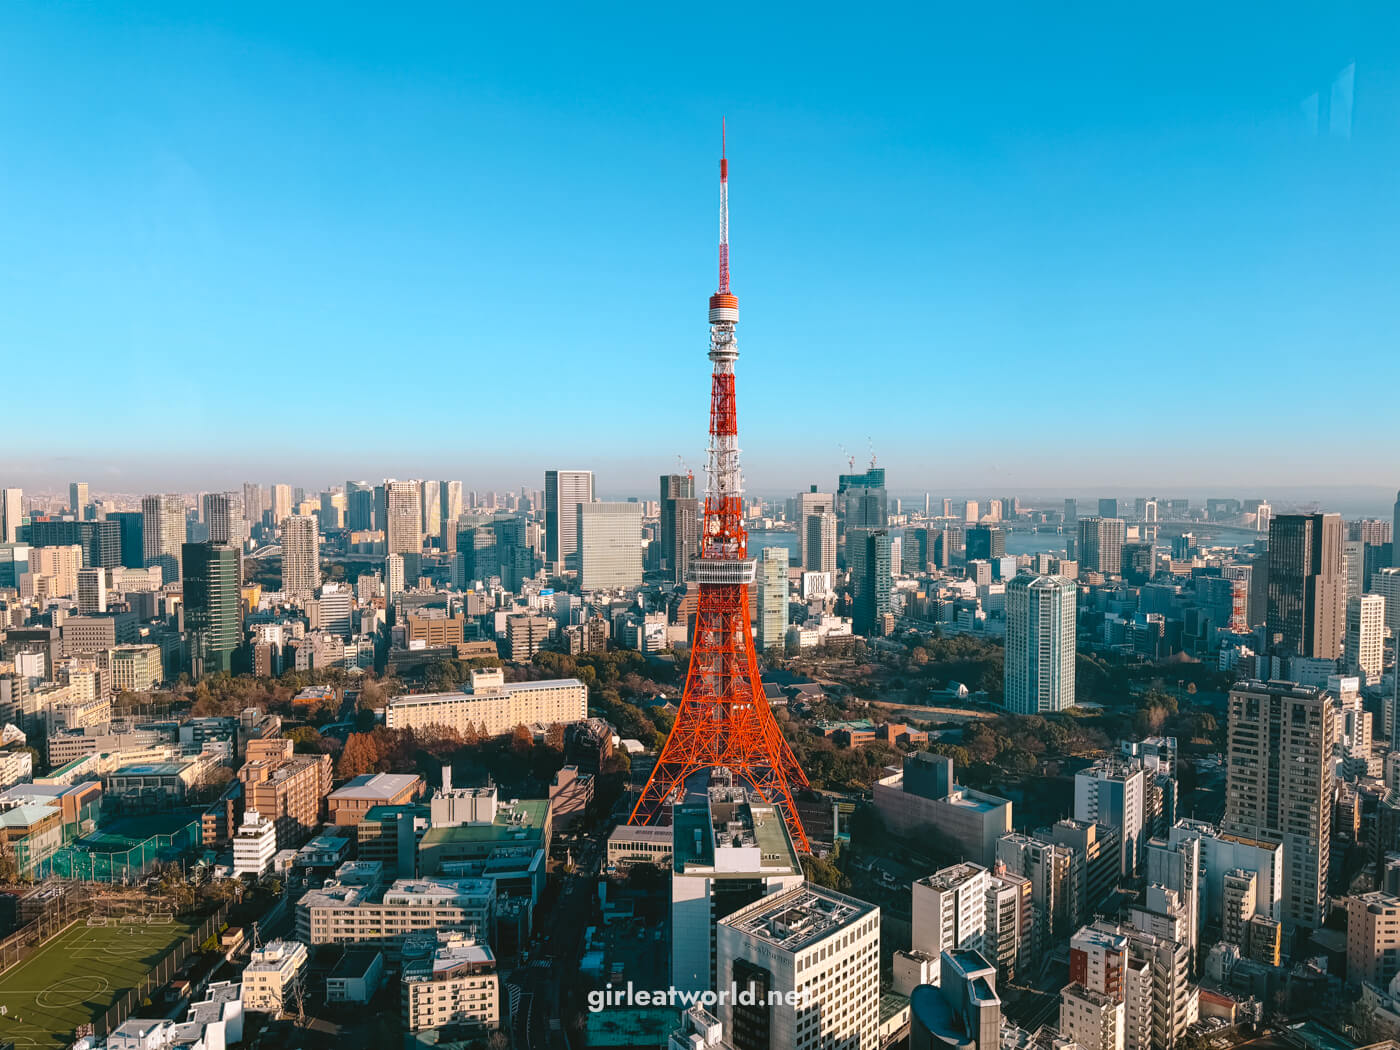 Tokyo Tower from Skylobby at Azabudai Hill